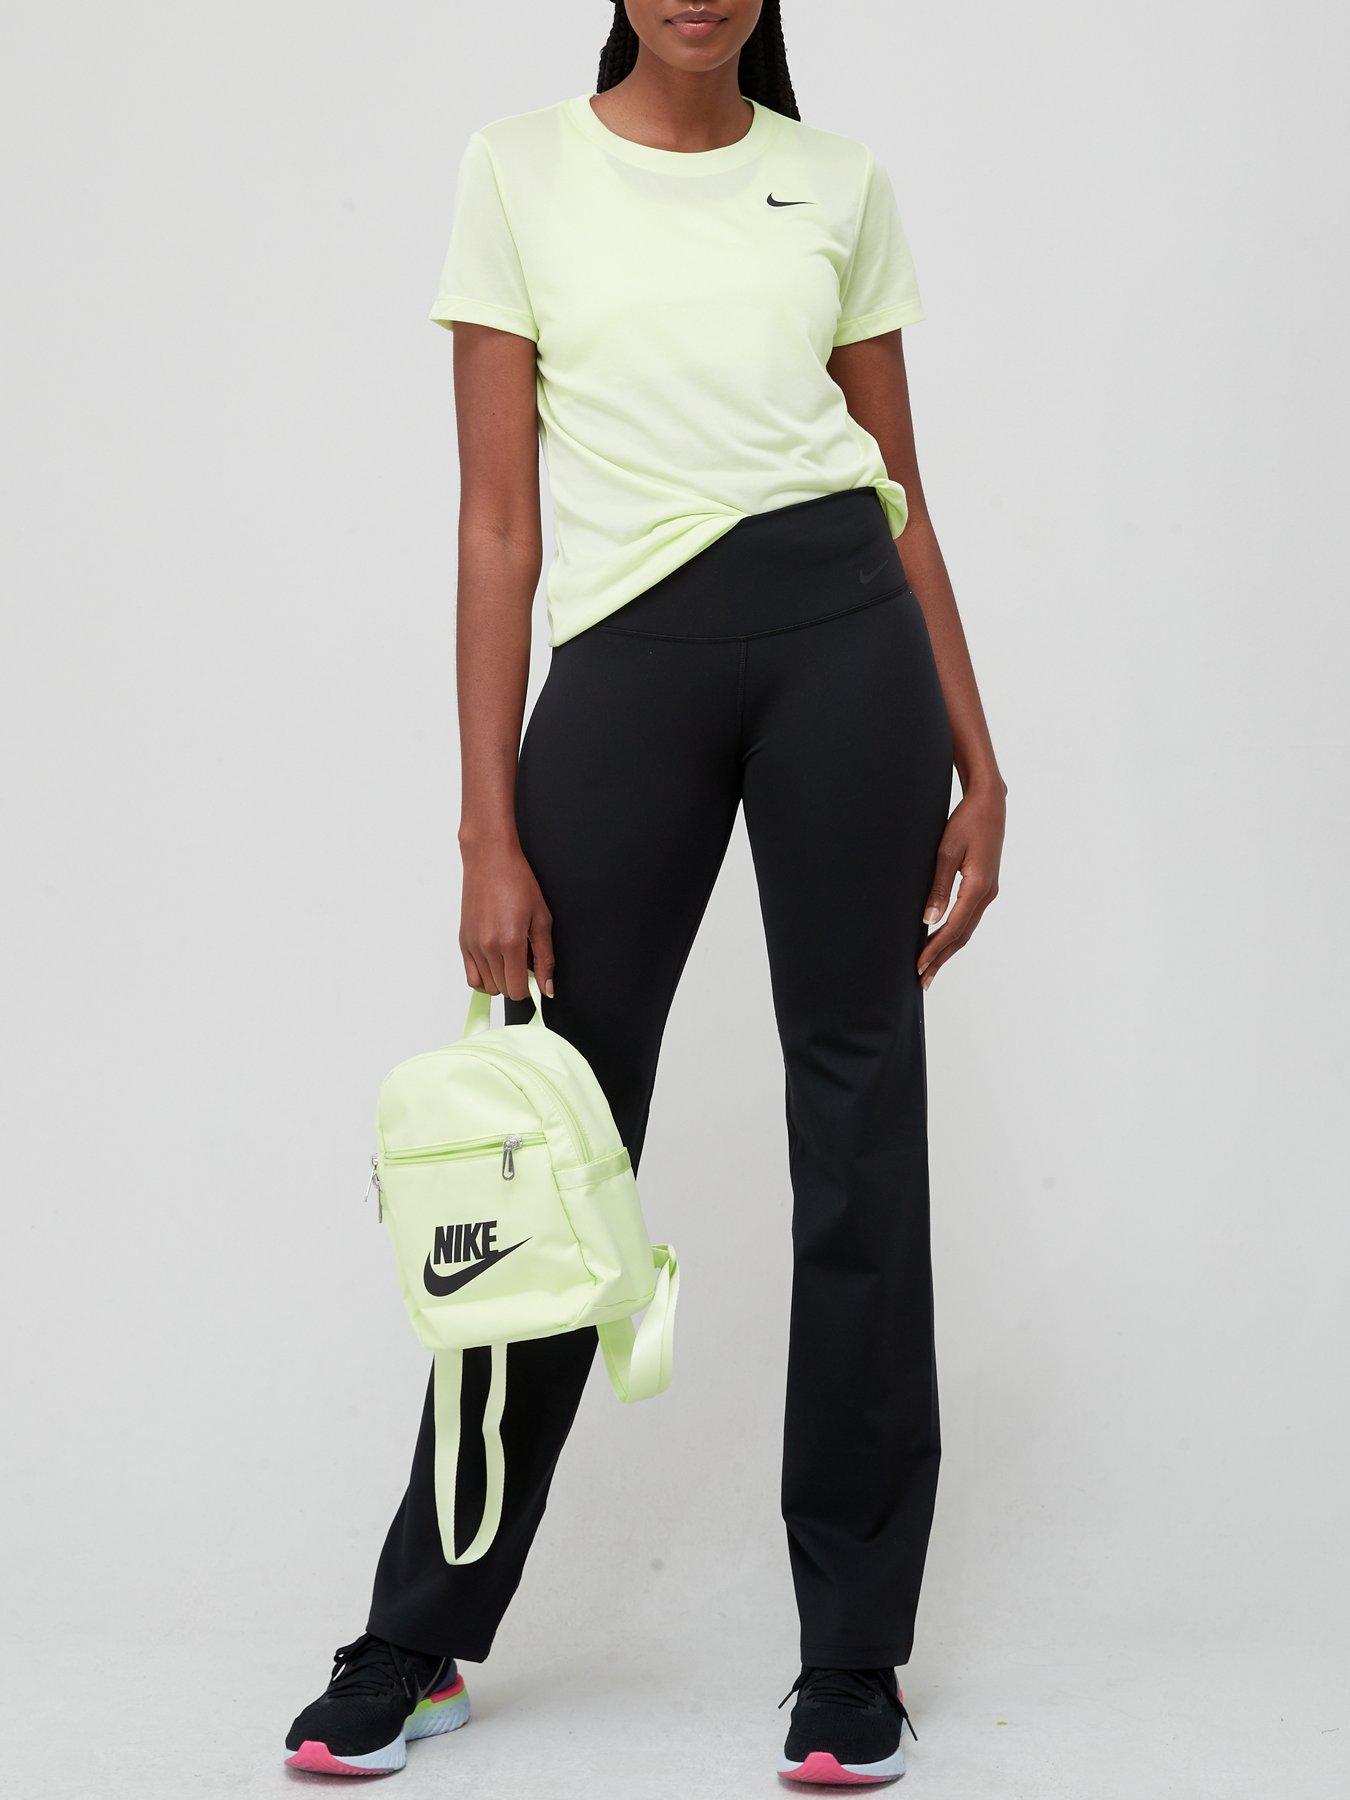 Marina sensibilidad Convencional Nike Training Power Classic Pants - Black | very.co.uk